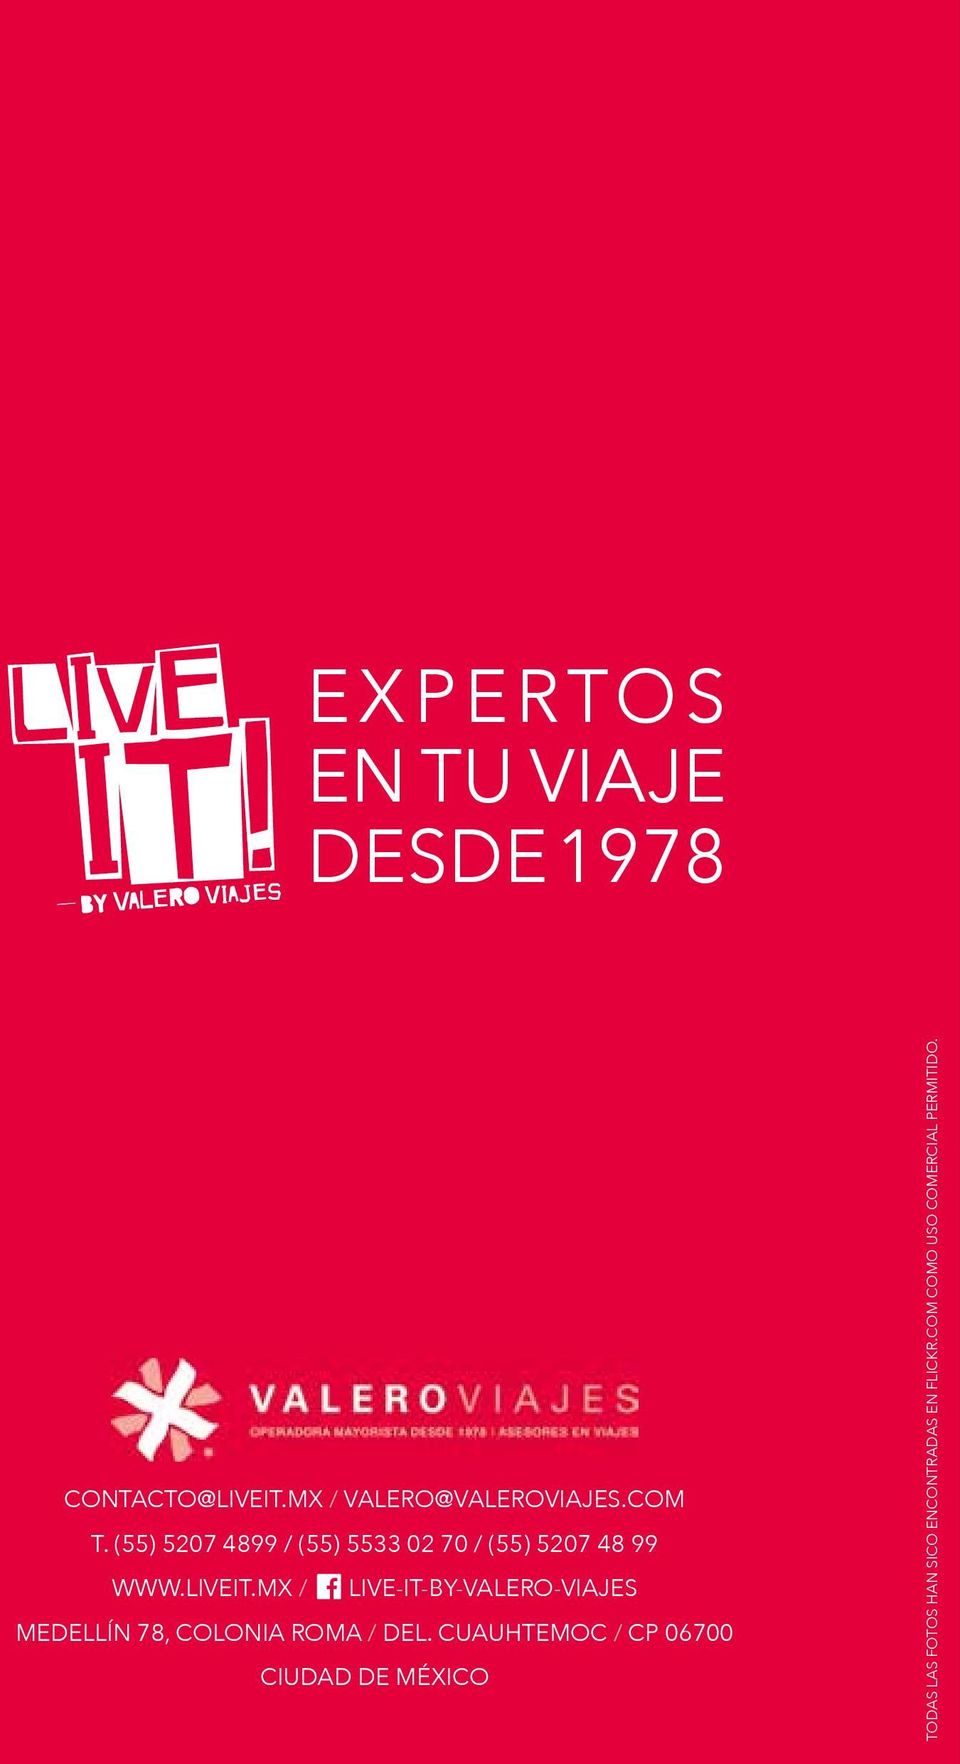 MX / LIVE-IT-BY-VALERO-VIAJES MEDELLÍN 78, COLONIA ROMA / DEL.